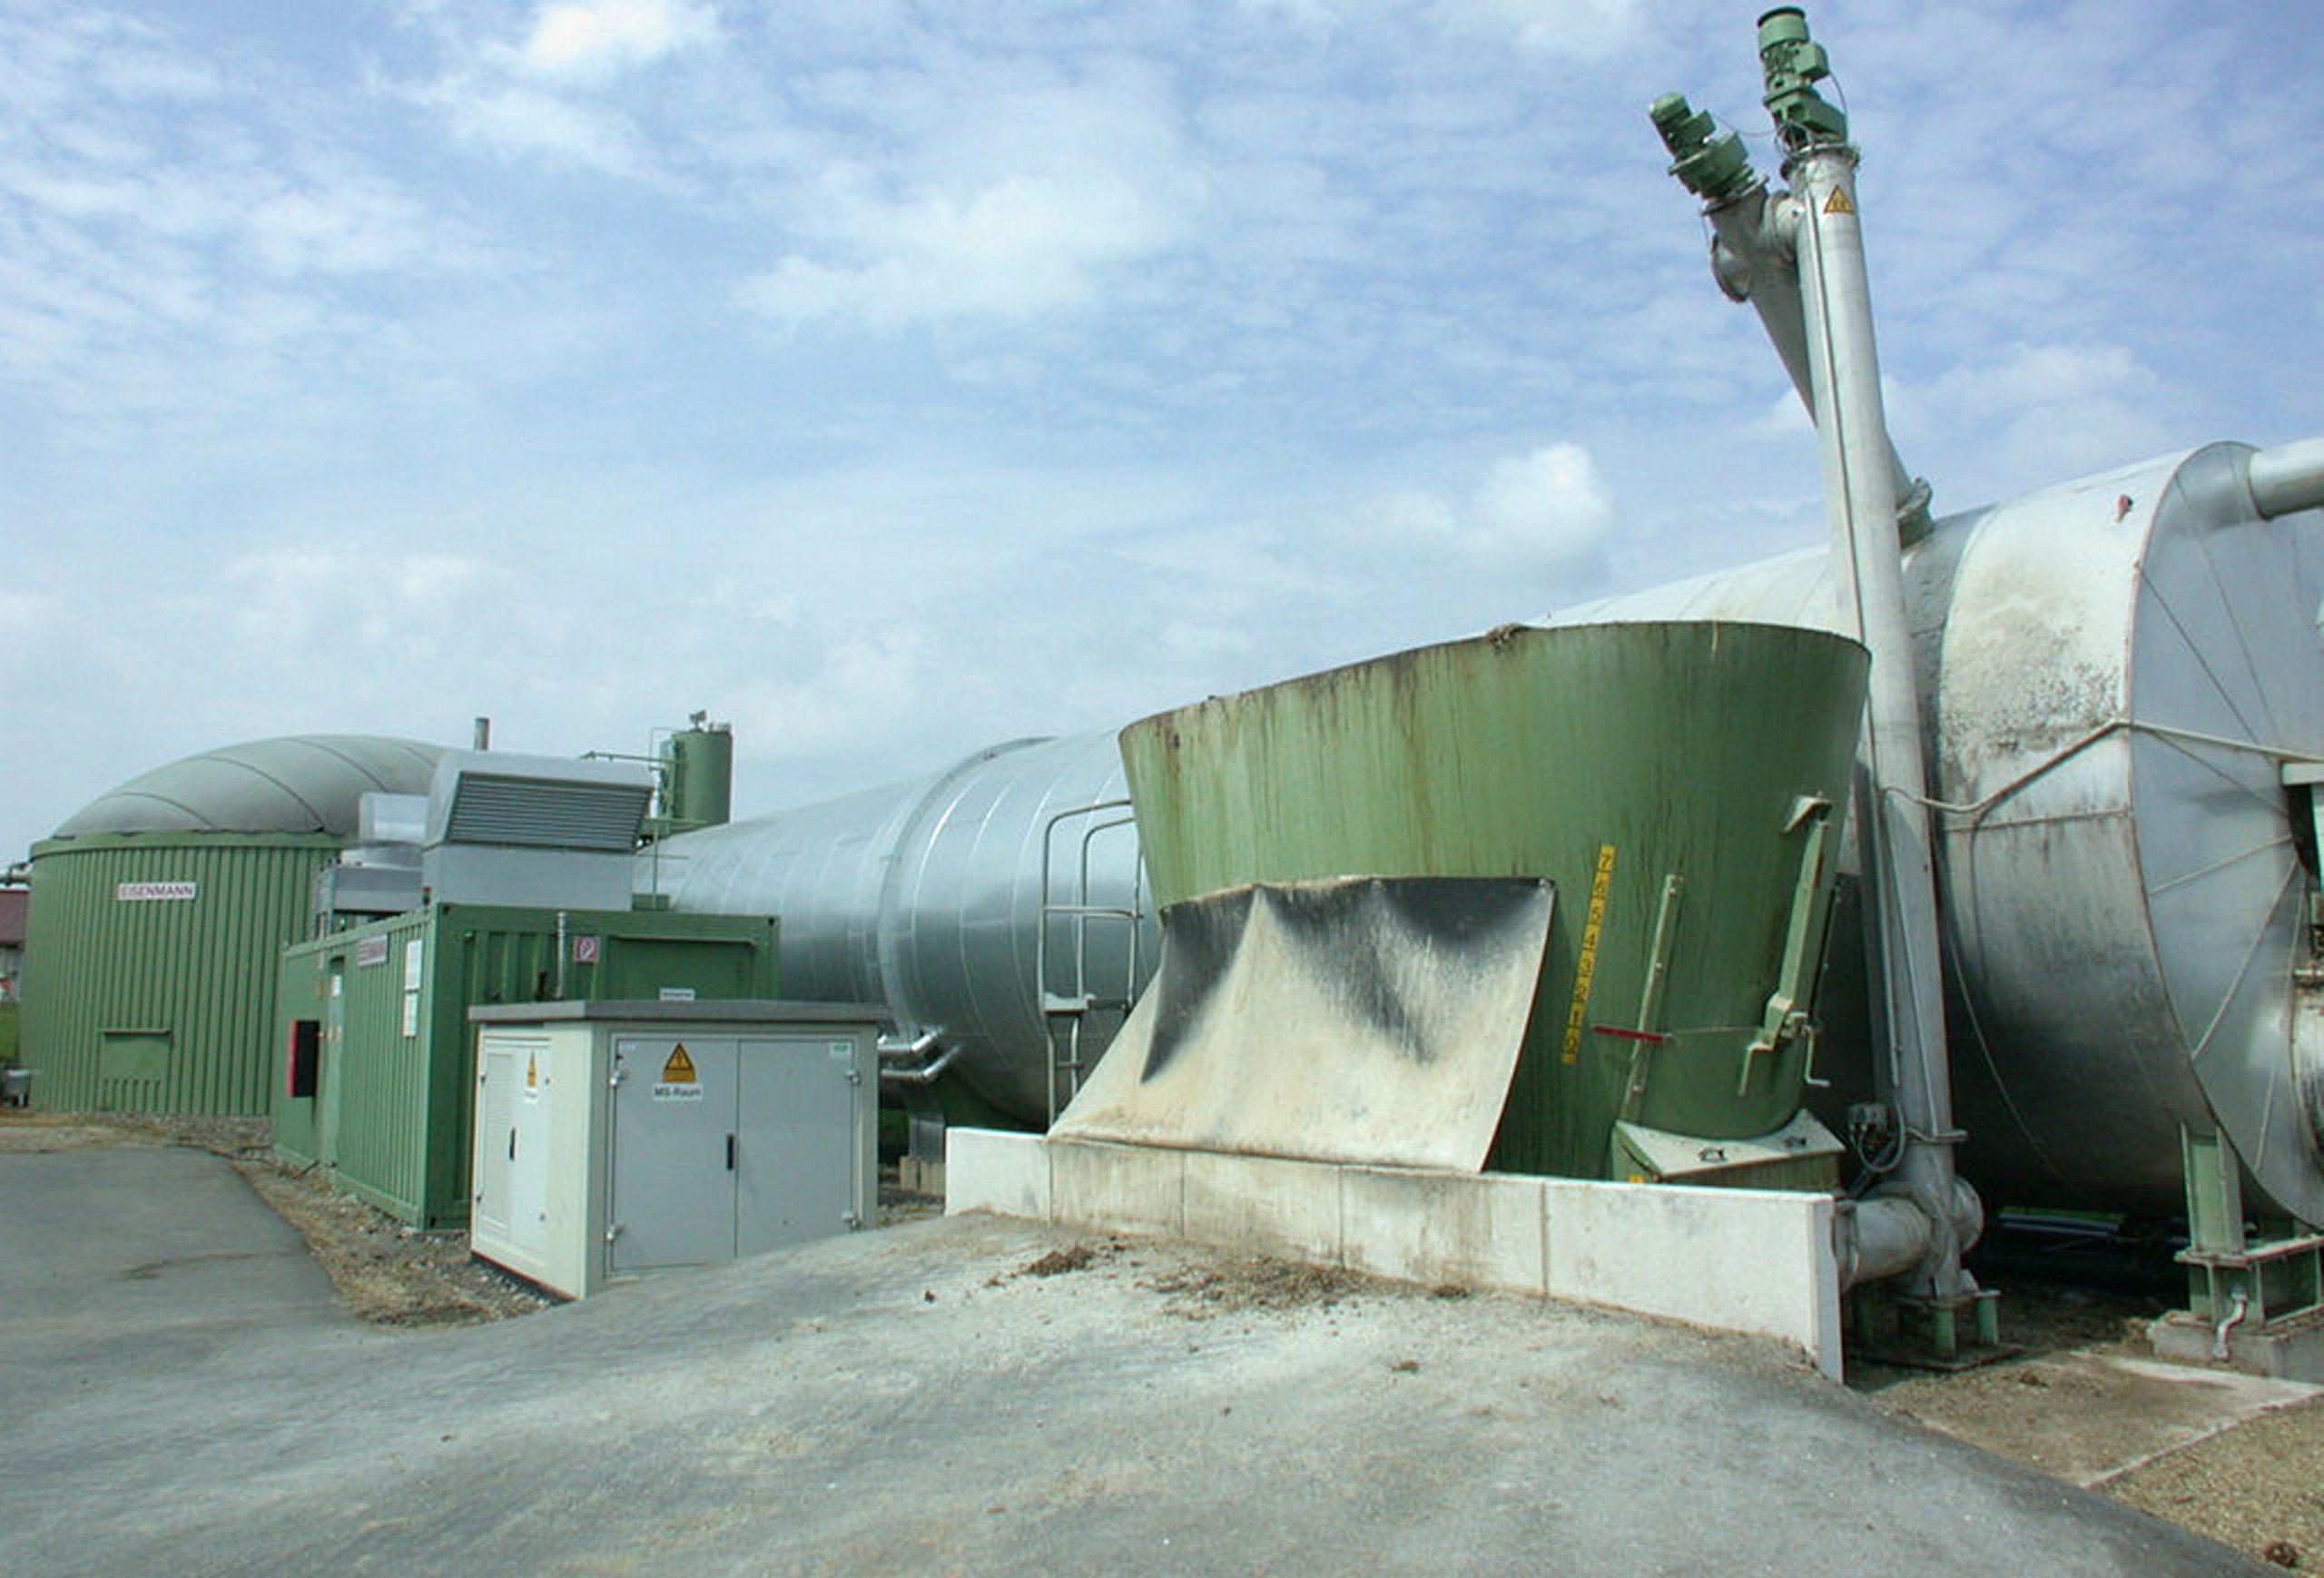 Bhubaneswar plans for a biogas plant